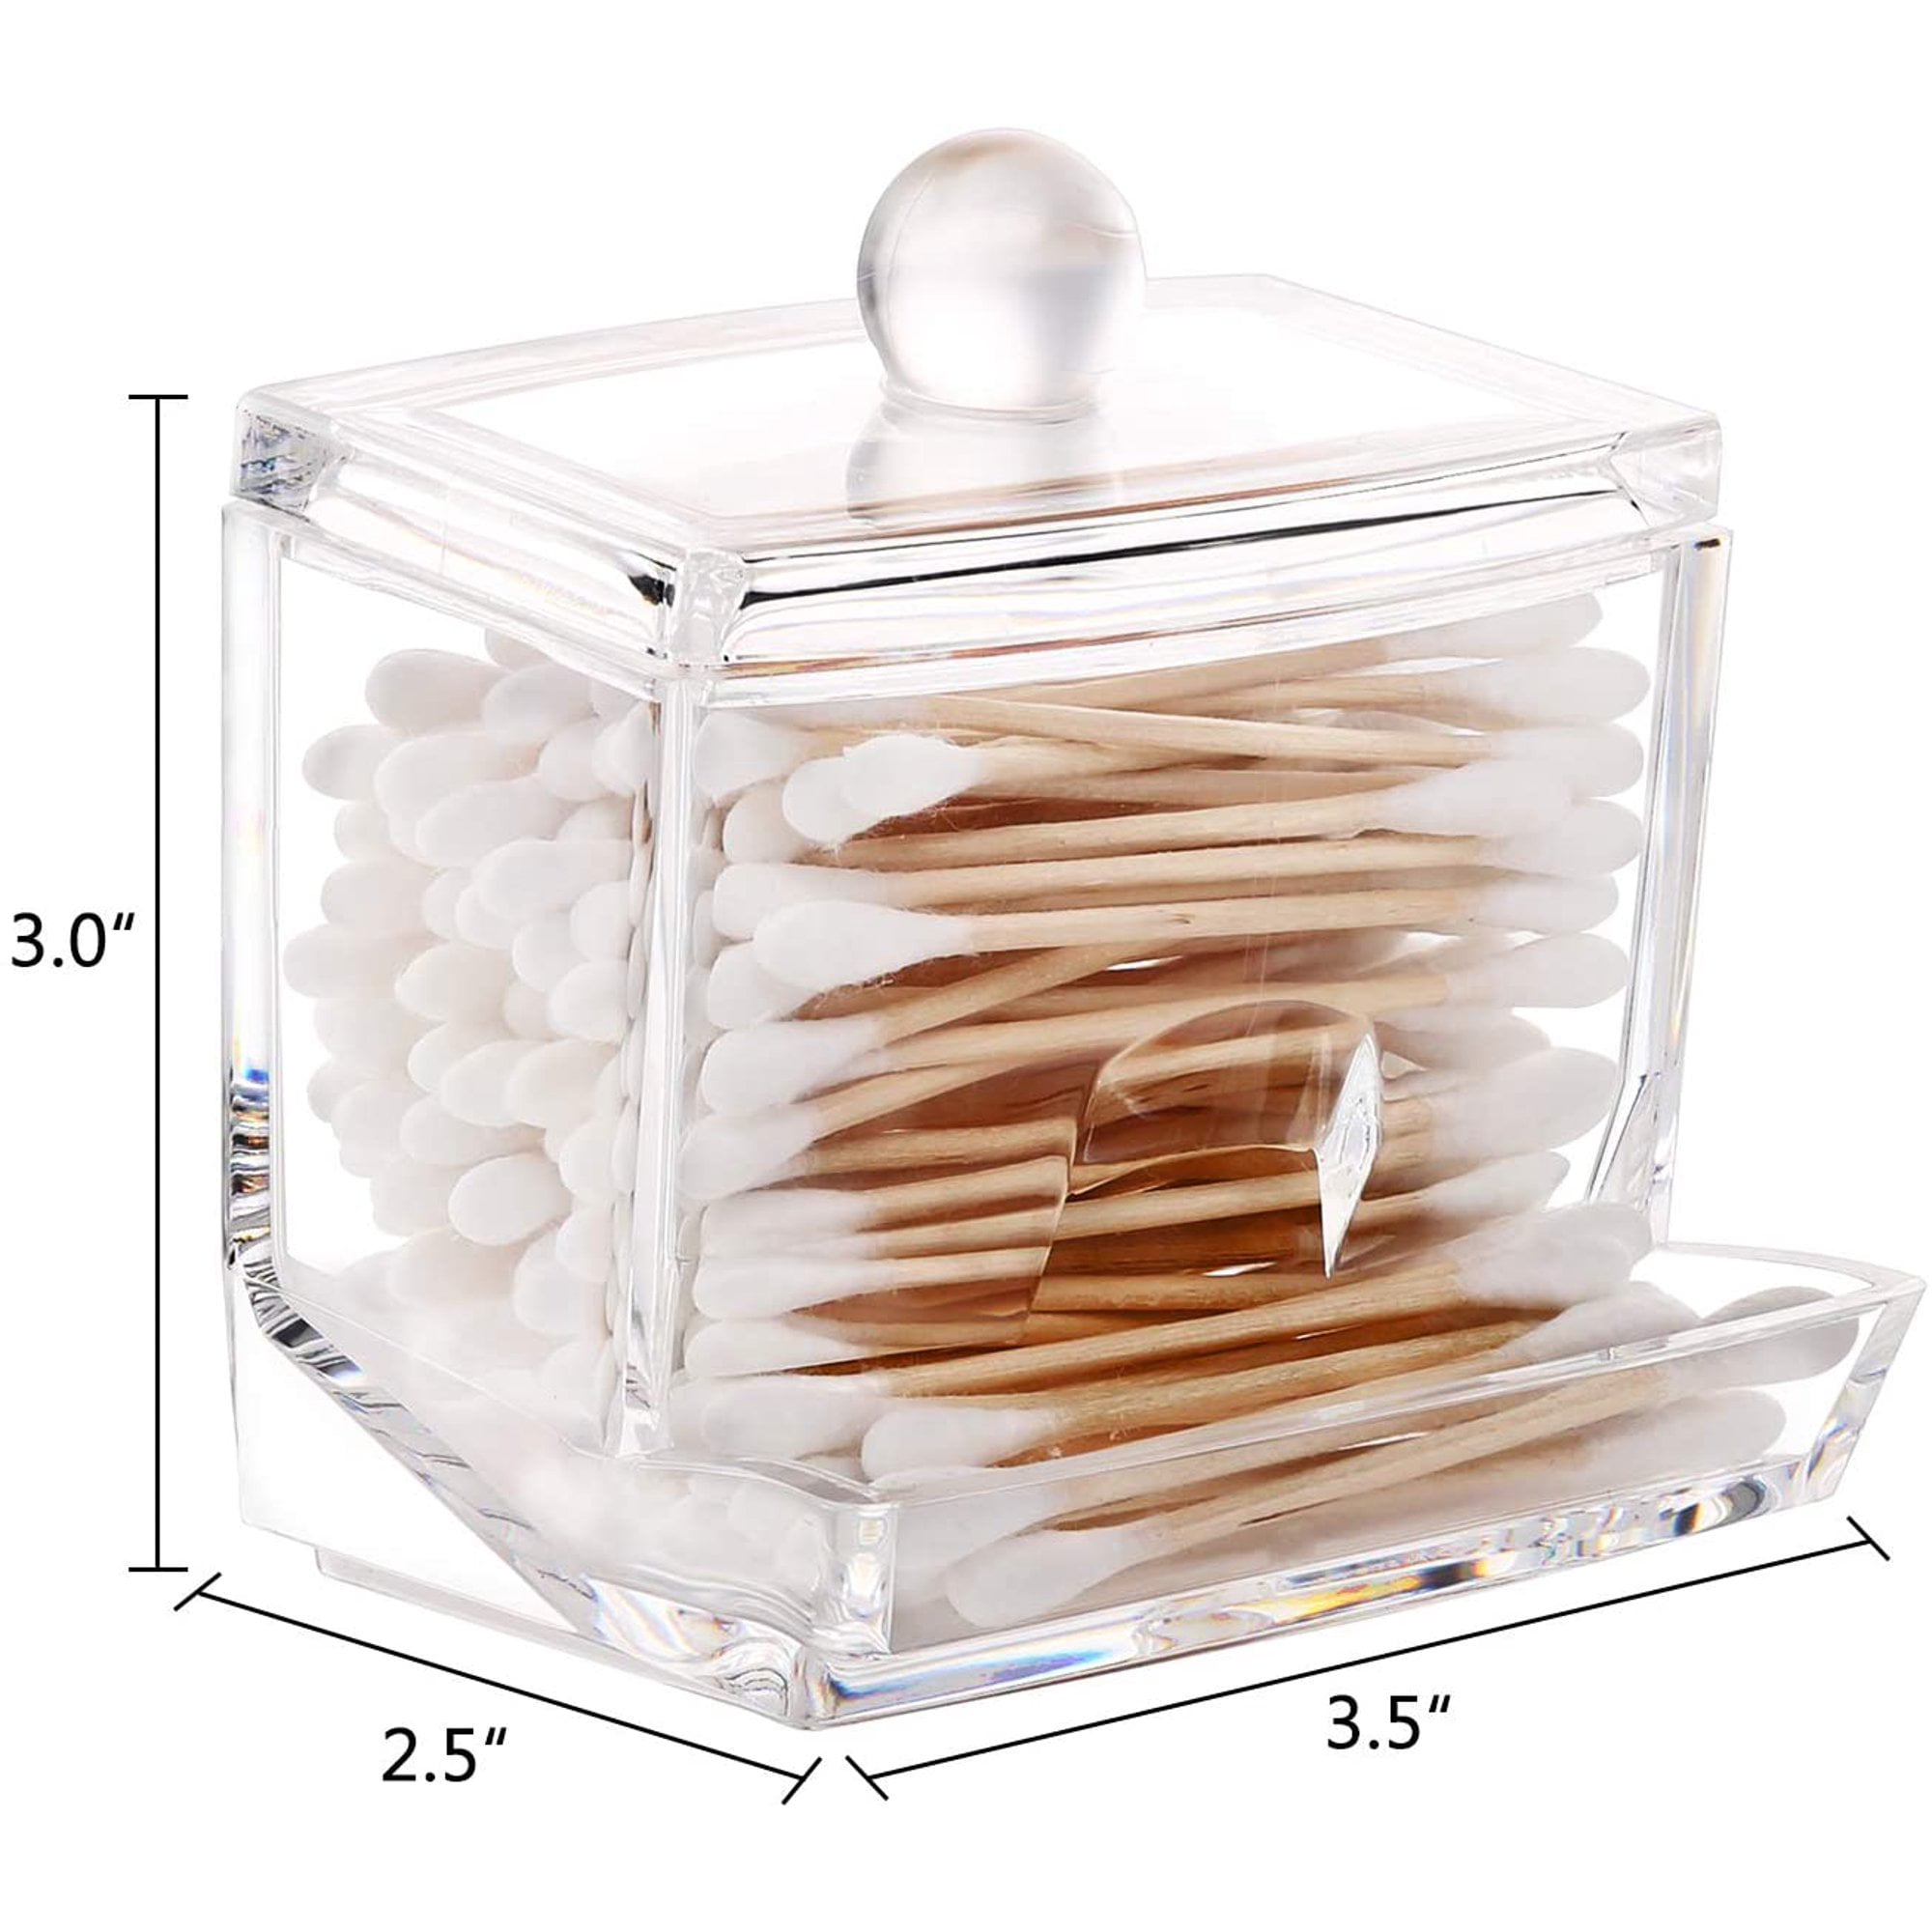 4X QTIP HOLDER Dispenser with Lids Acrylic Bathroom Jars Cotton Swab  Storage .e $18.59 - PicClick AU